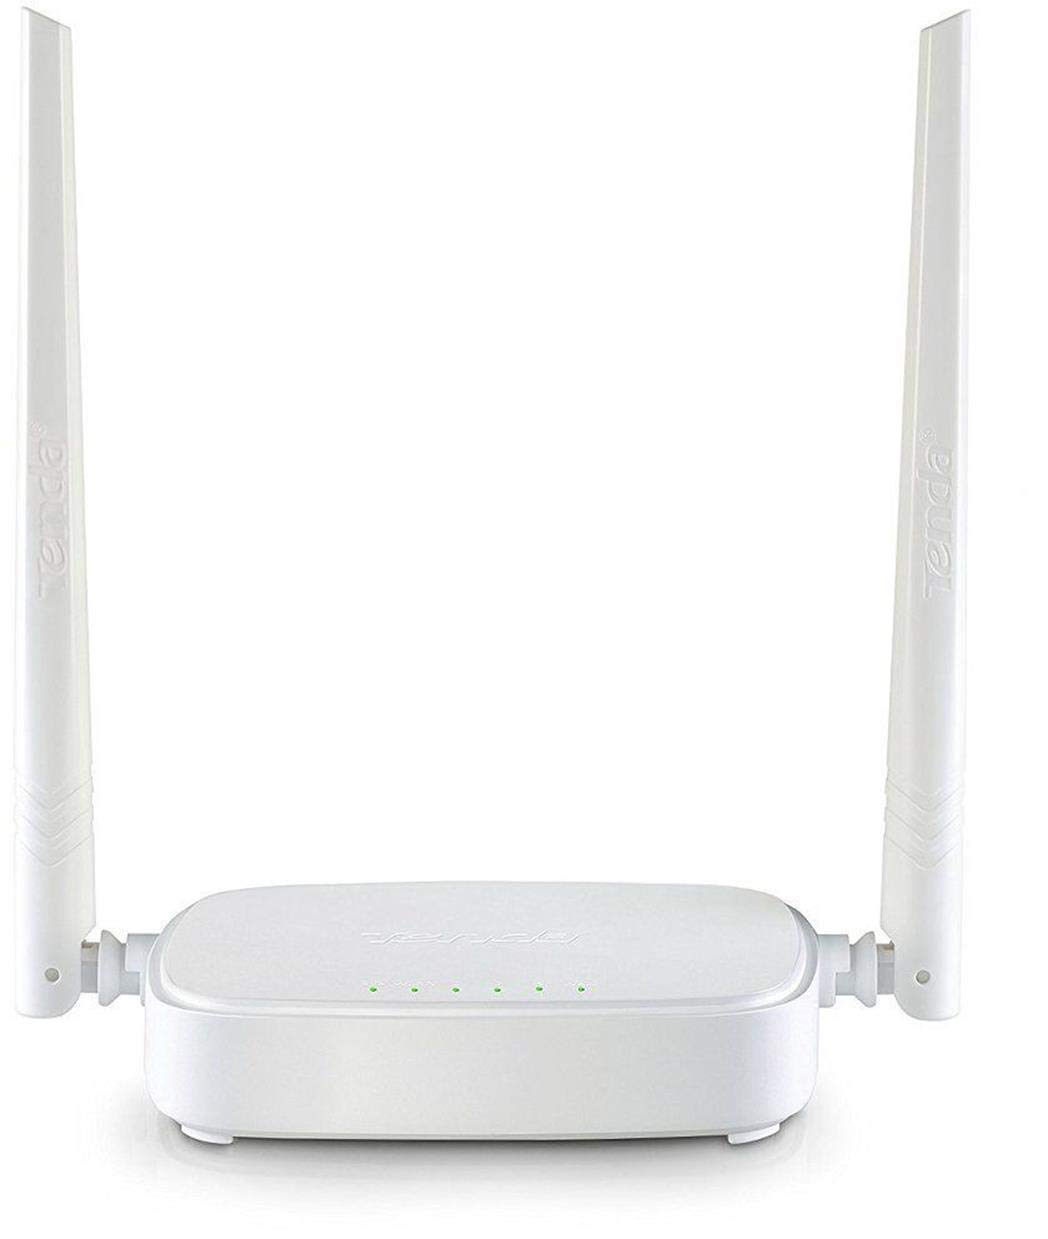 Tenda N301 Wireless-N300 Easy Setup Router (White, Not a Modem) - RJ45 (single_band, 100 megabits_per_second)